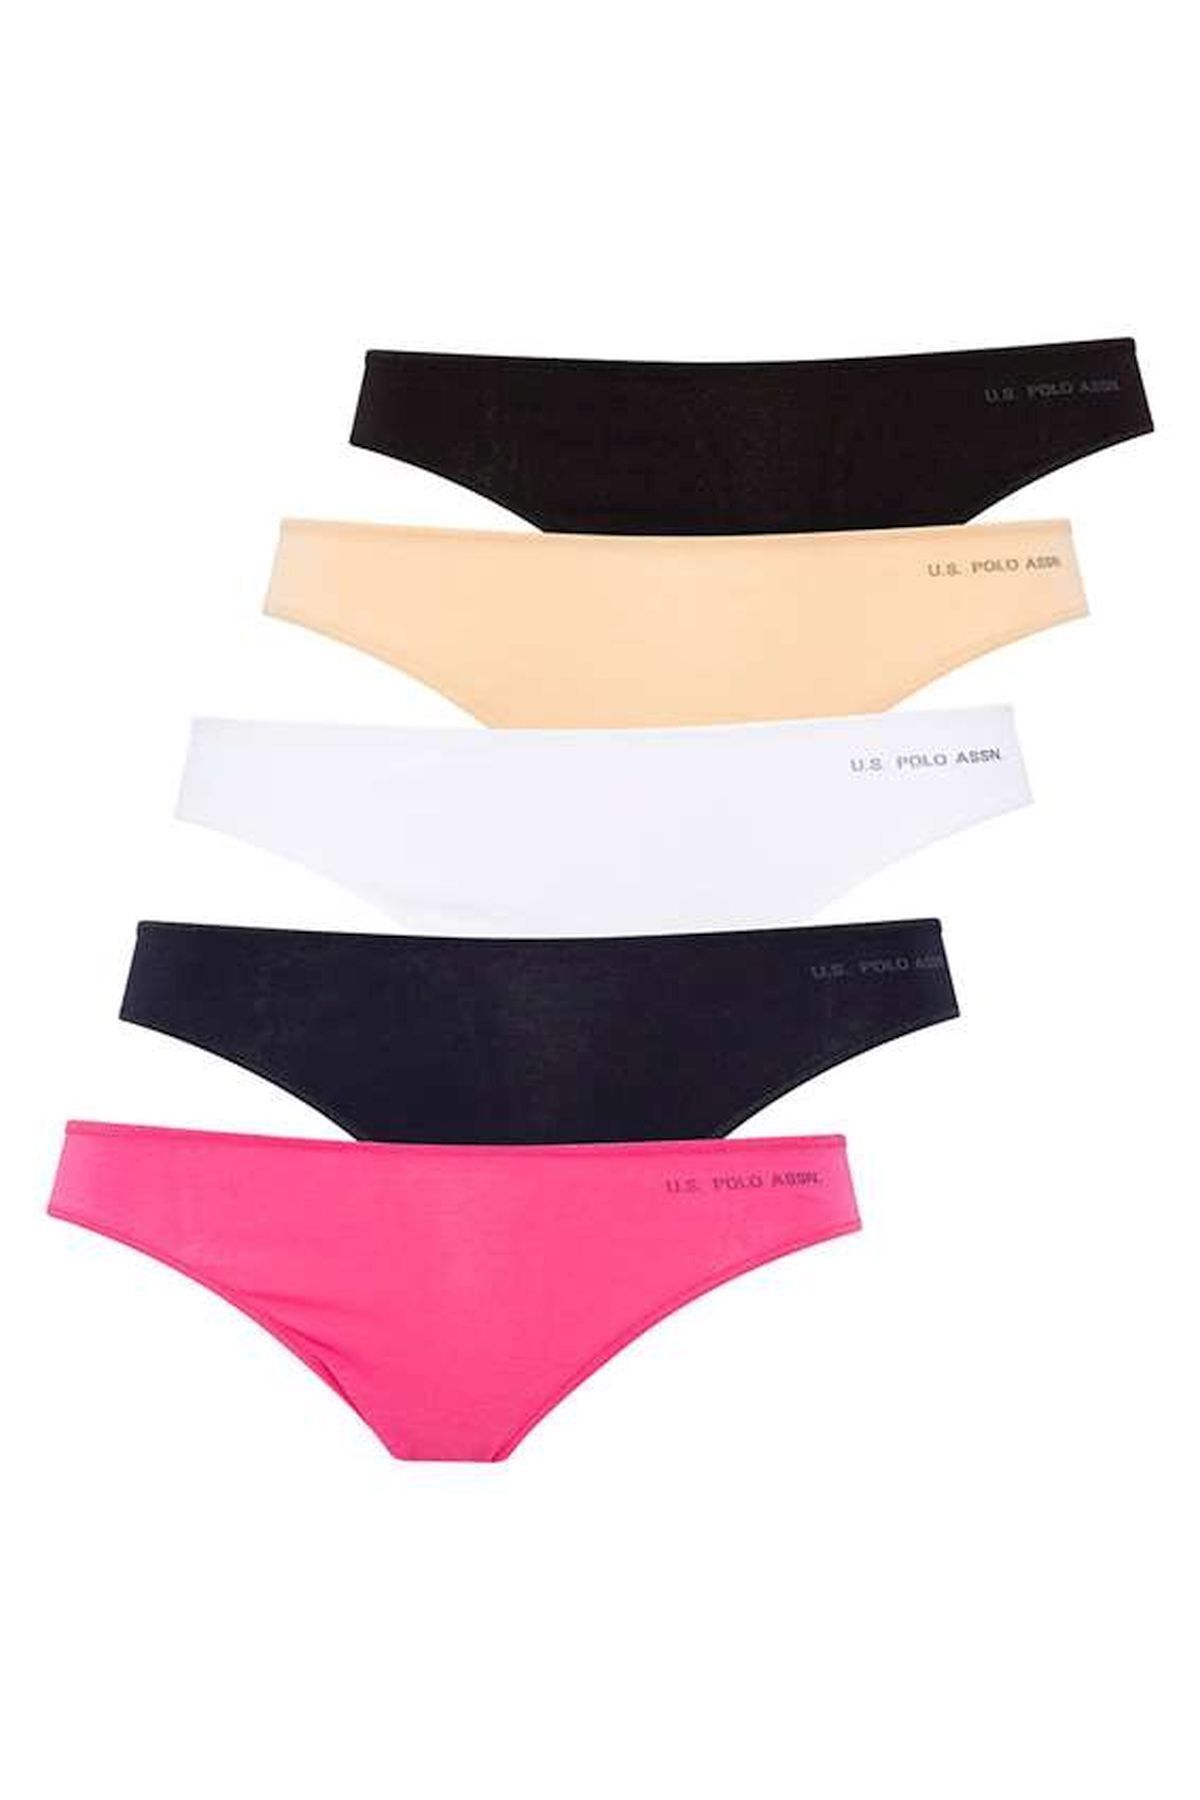 Calvin Klein Women's Invisible Line Thong Underwear D3428 - Sox